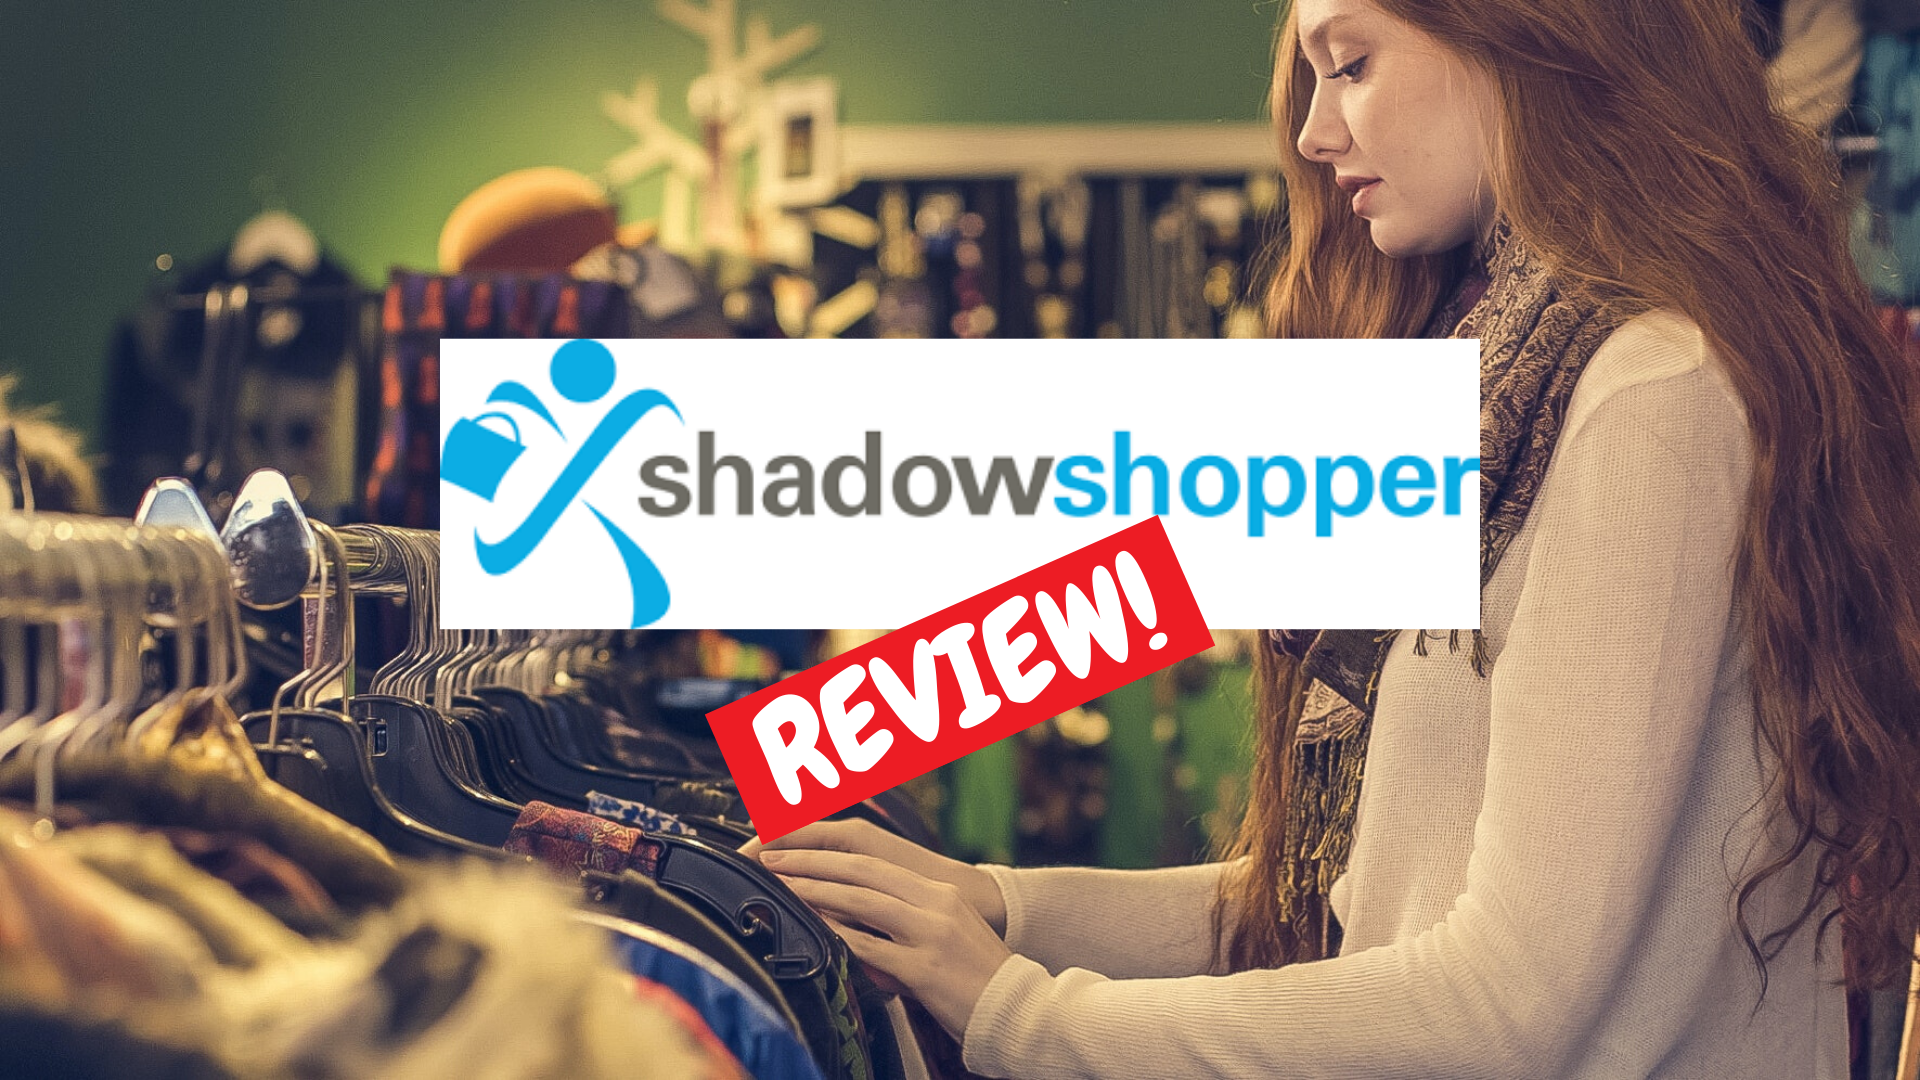 shadow shopper 2020 review